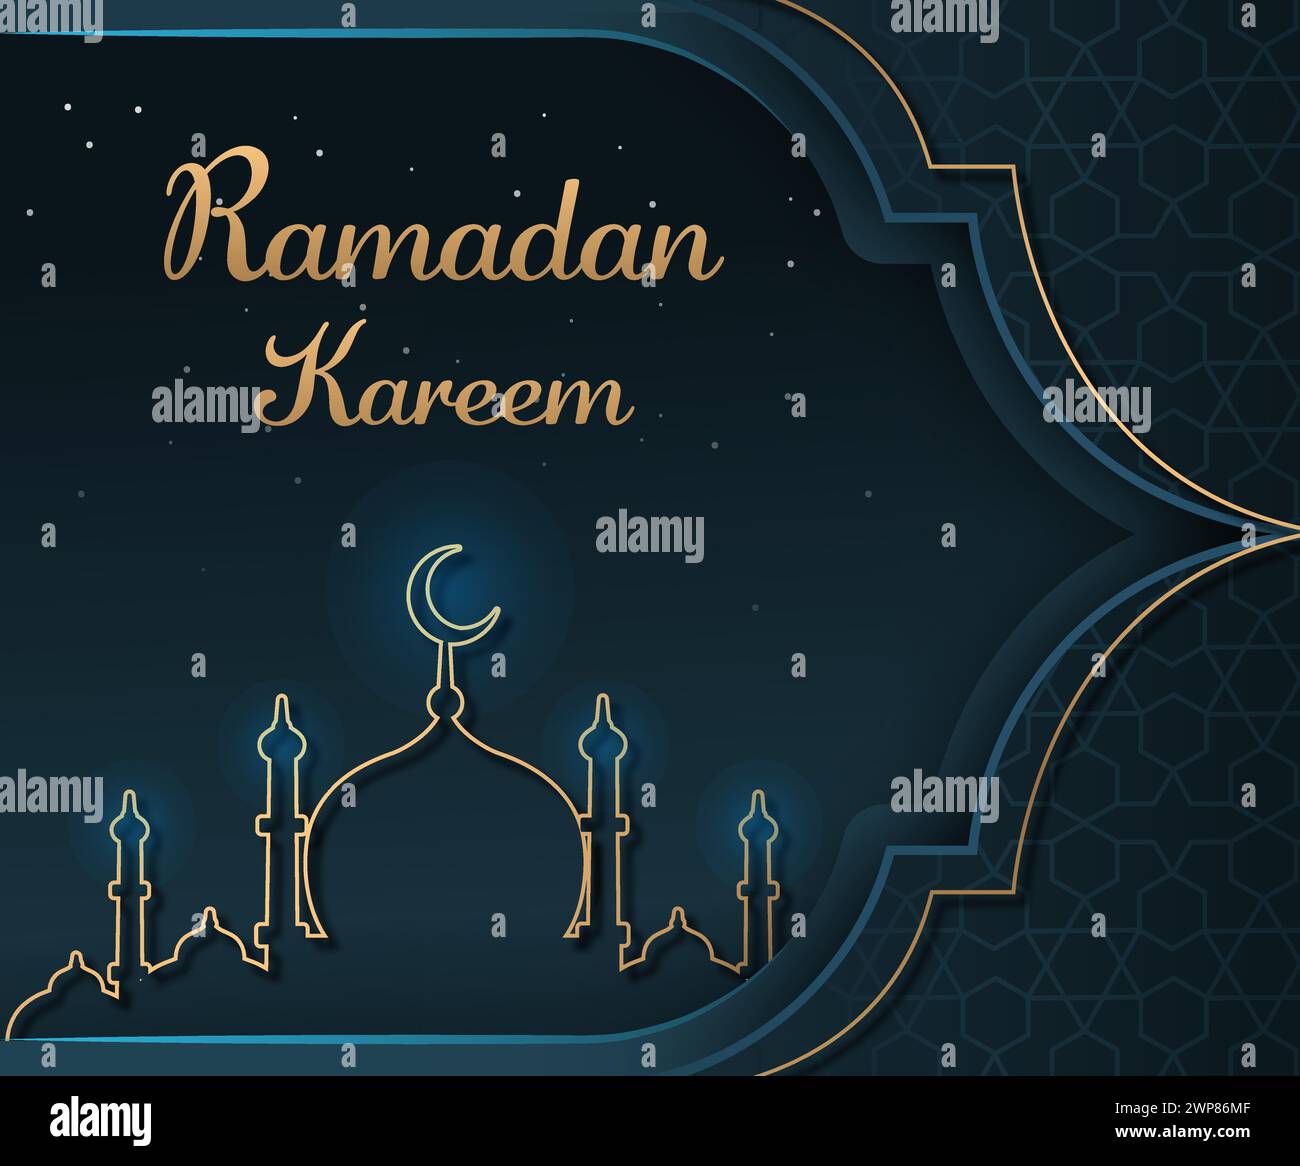 Ramadan Kareem Design con Mosque Line Art sfondo illustrazione vettoriale Illustrazione Vettoriale